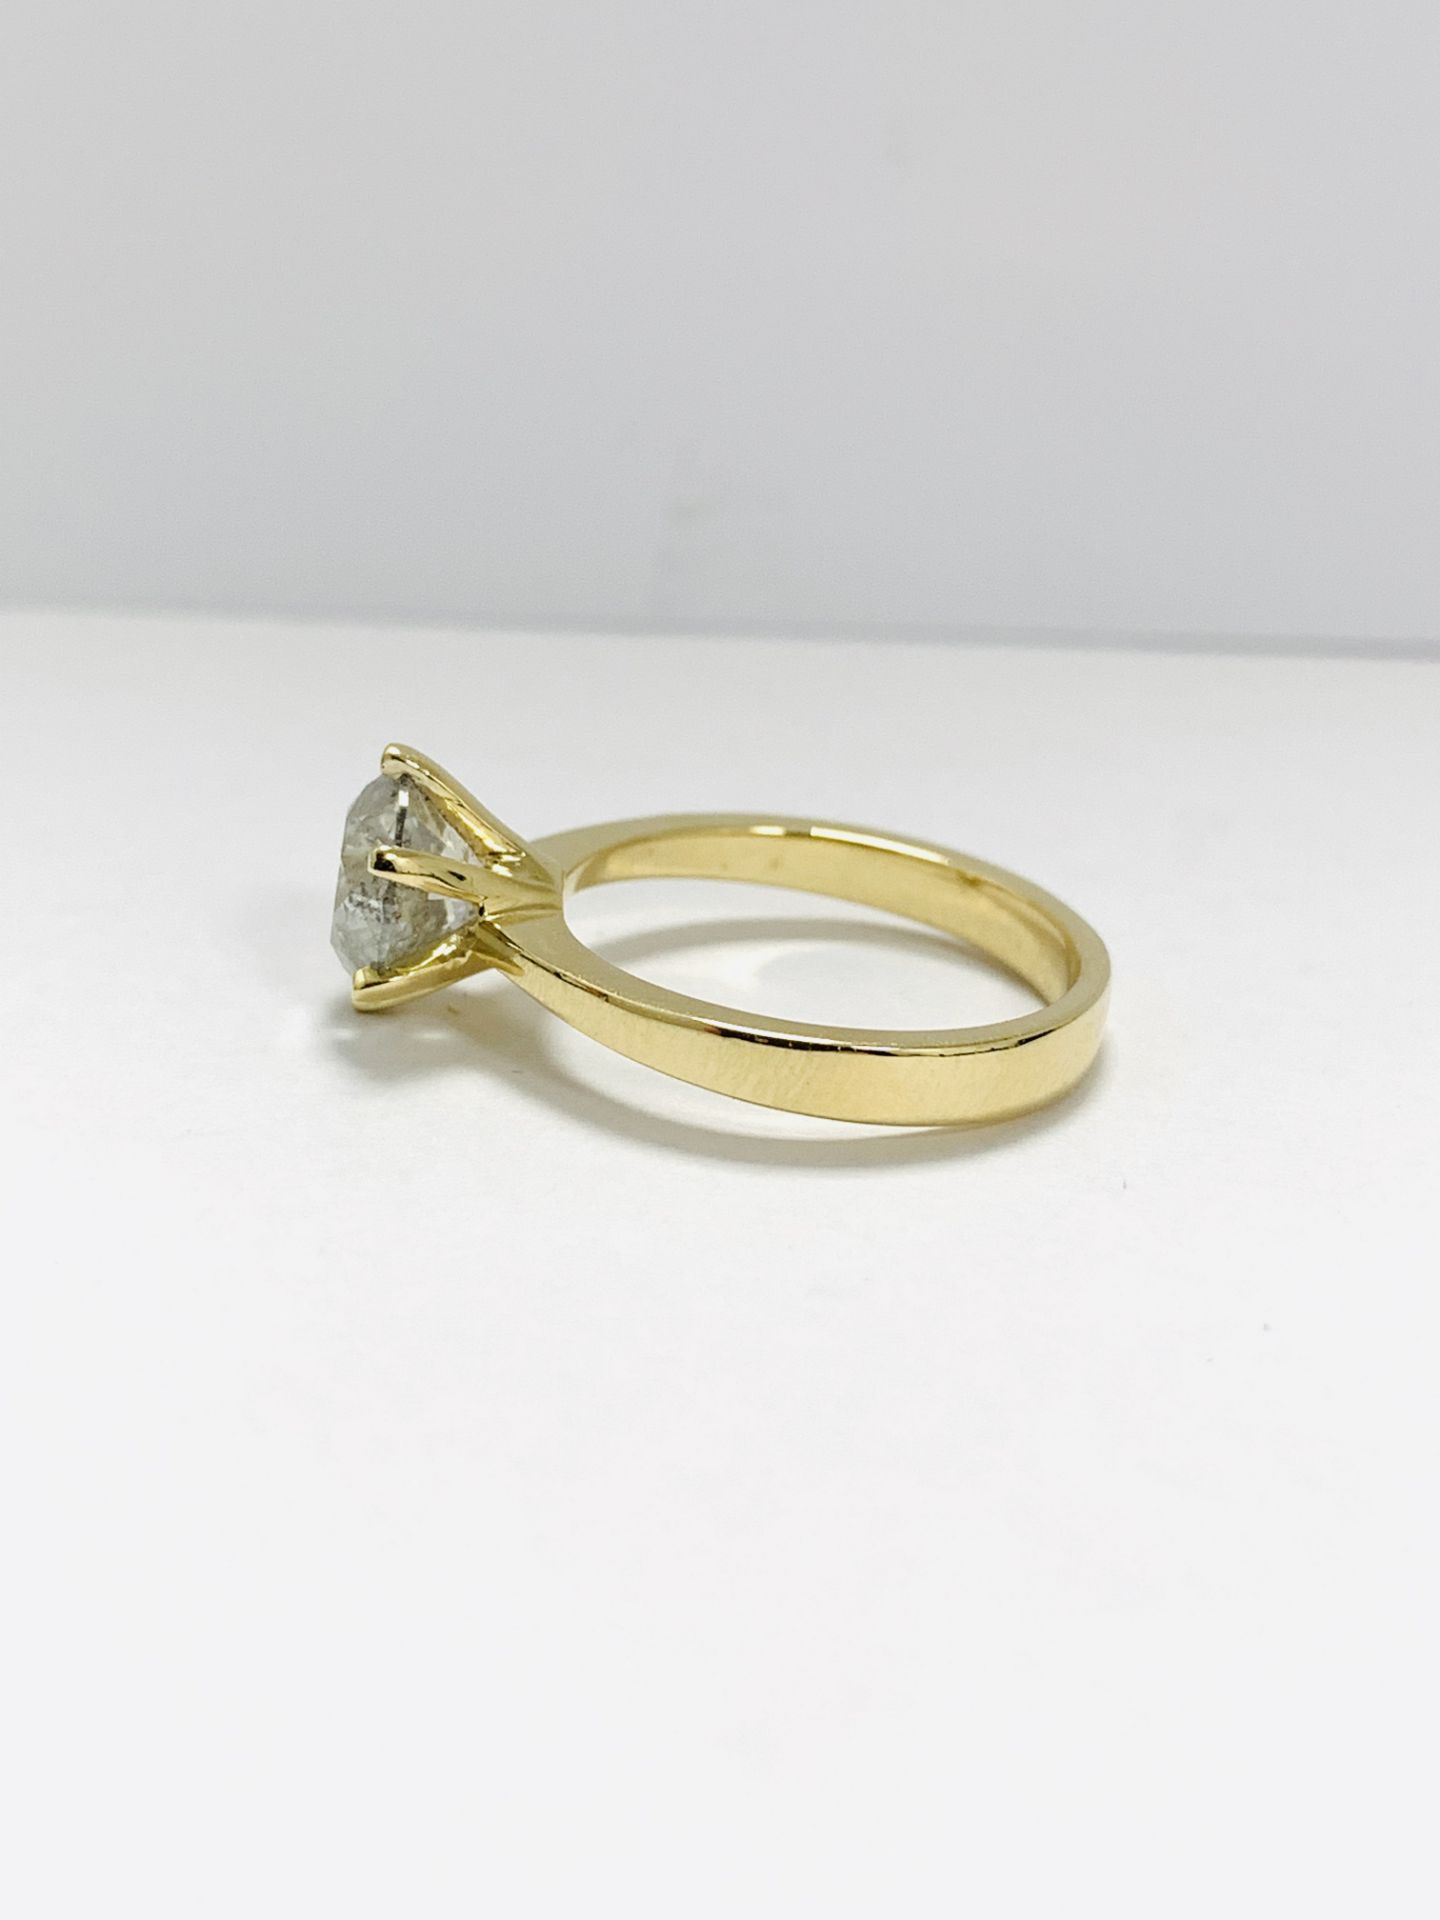 14K Yellow Gold Ring - Image 3 of 10